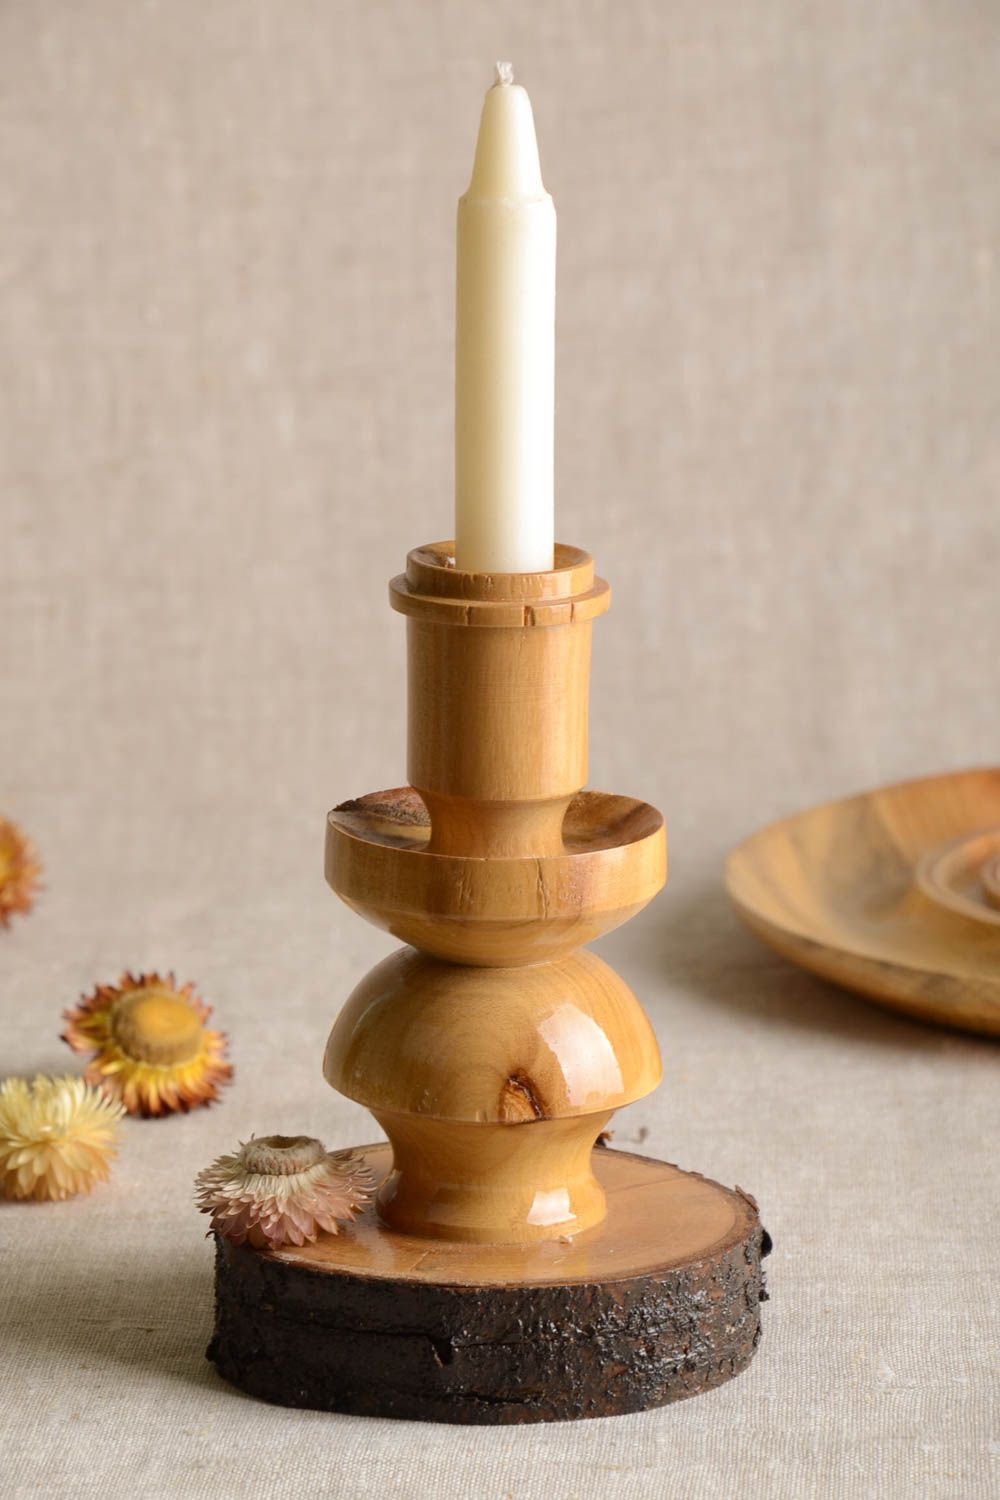 Handmade candlestick designer candlestick wooden candle holder decor ideas photo 1